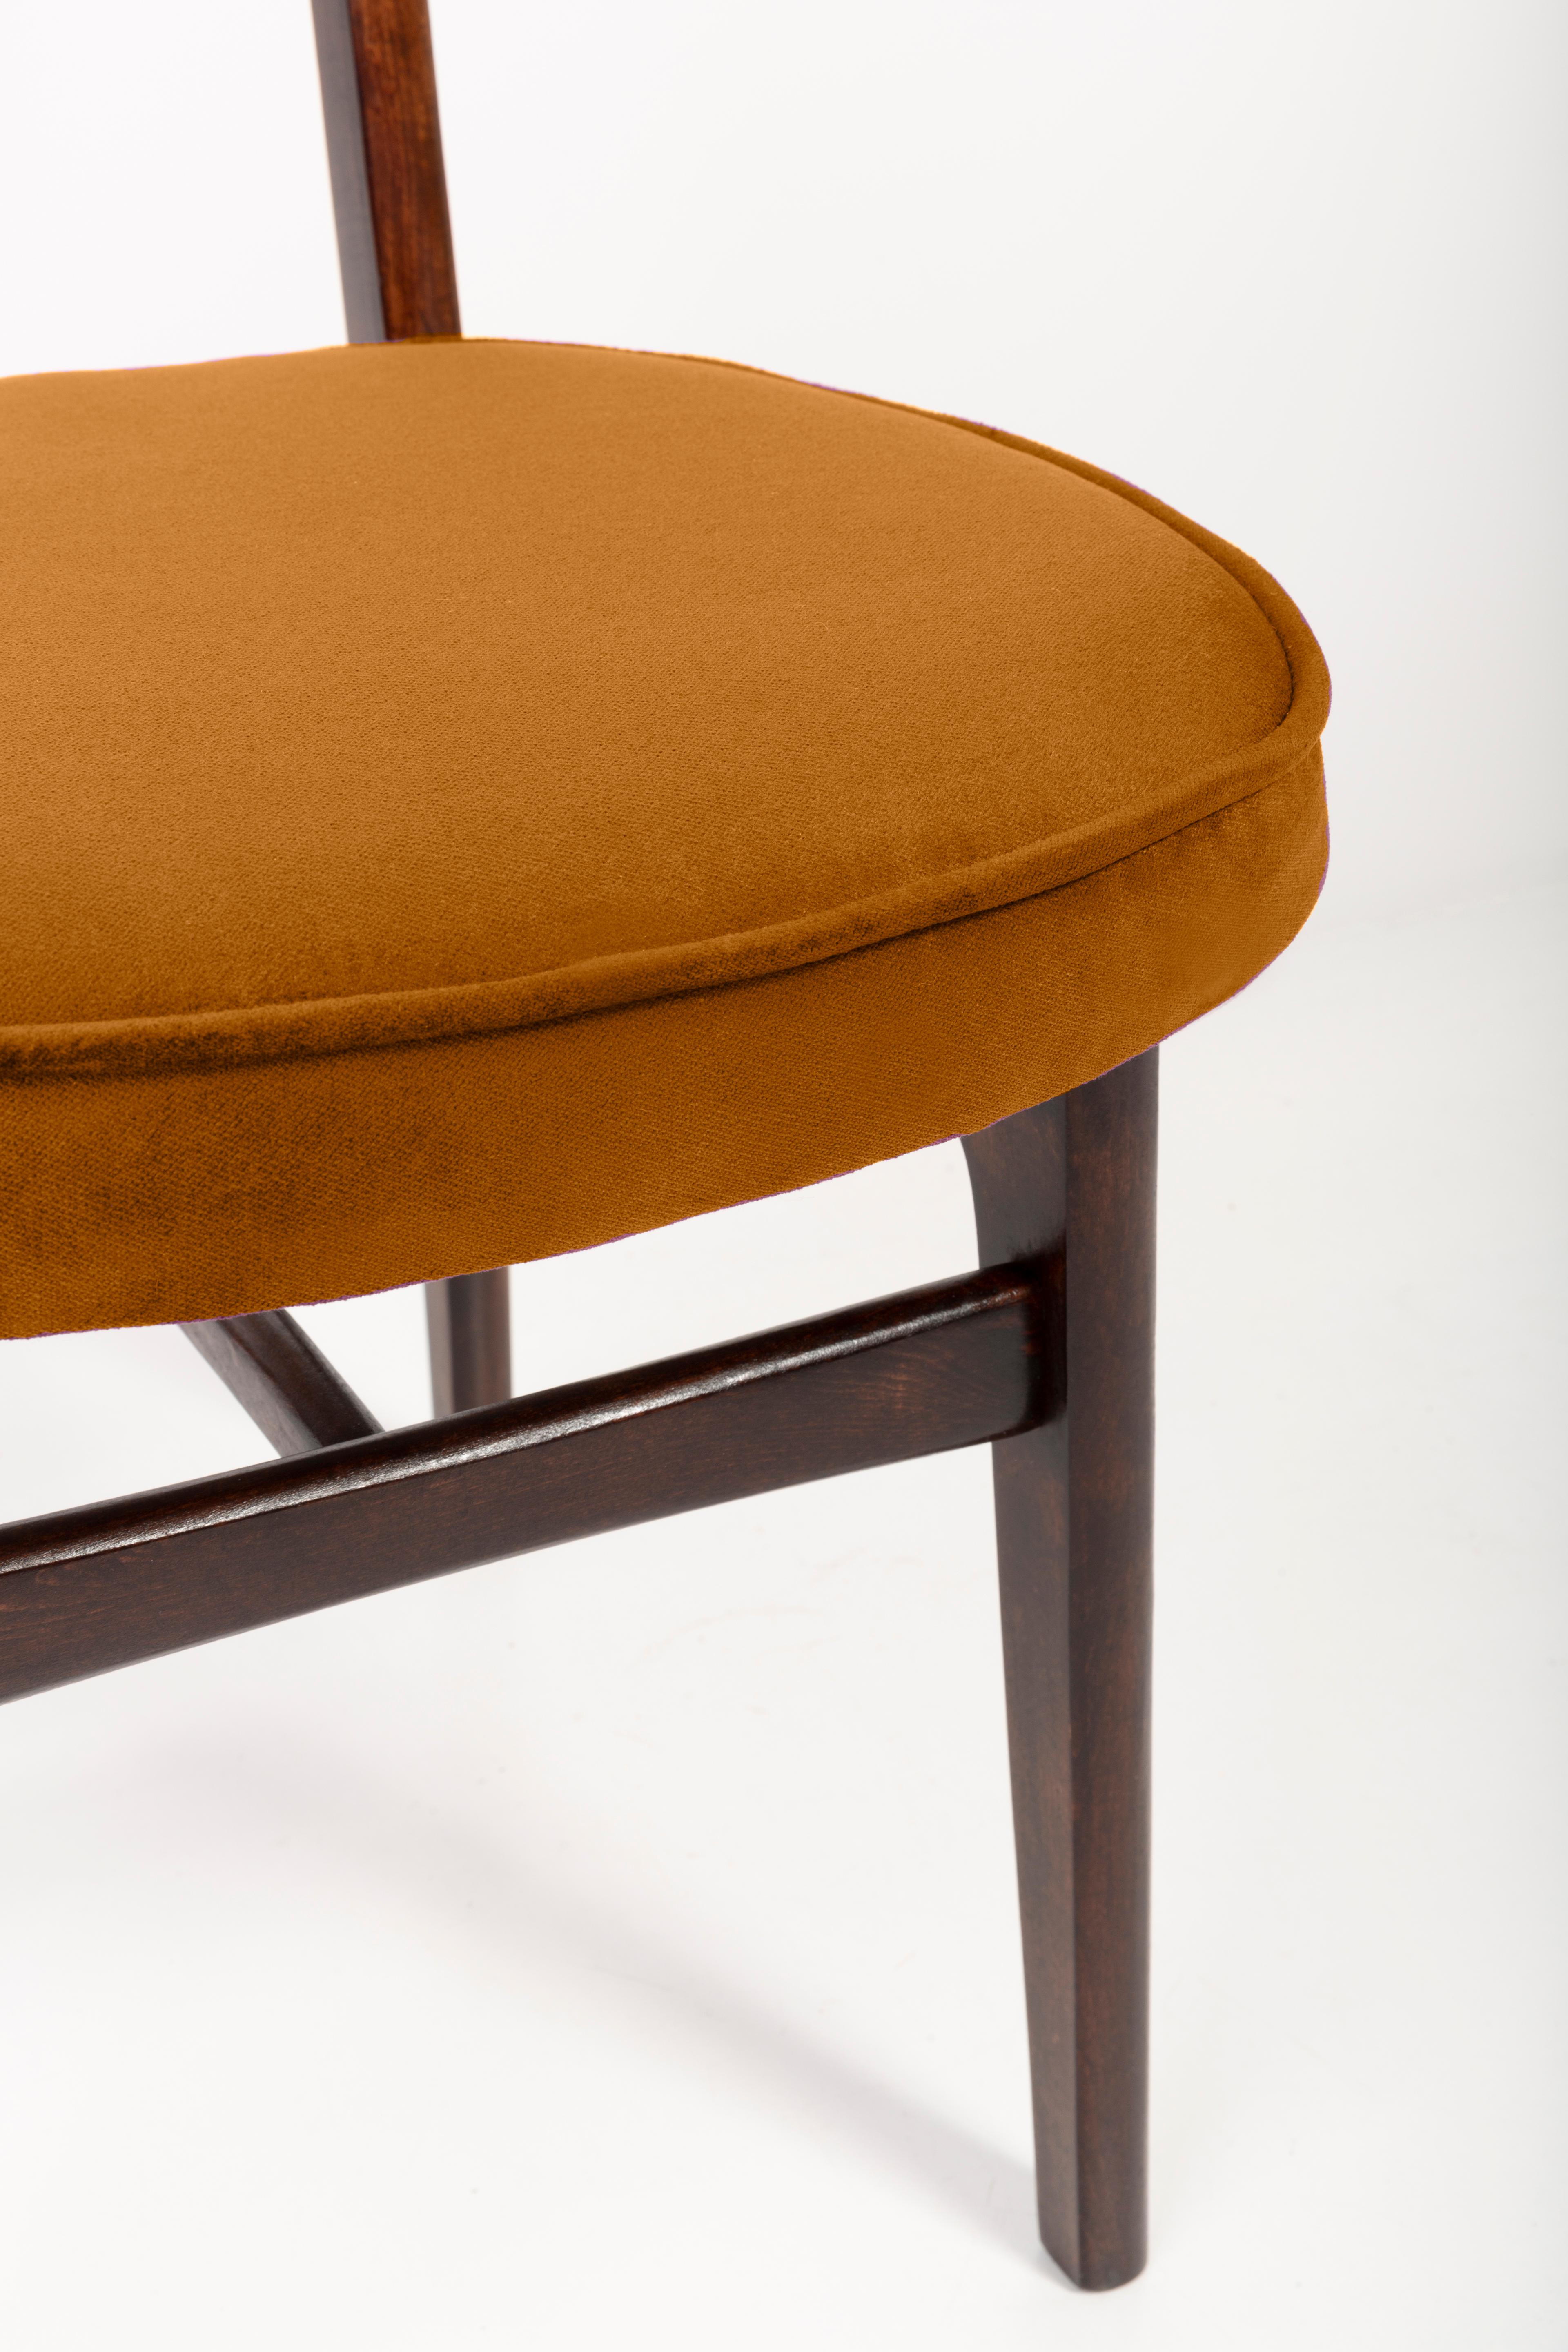 Textile Four 20th Century Copper Velvet Chairs Designed by Rajmund Halas, Europe, 1960s For Sale